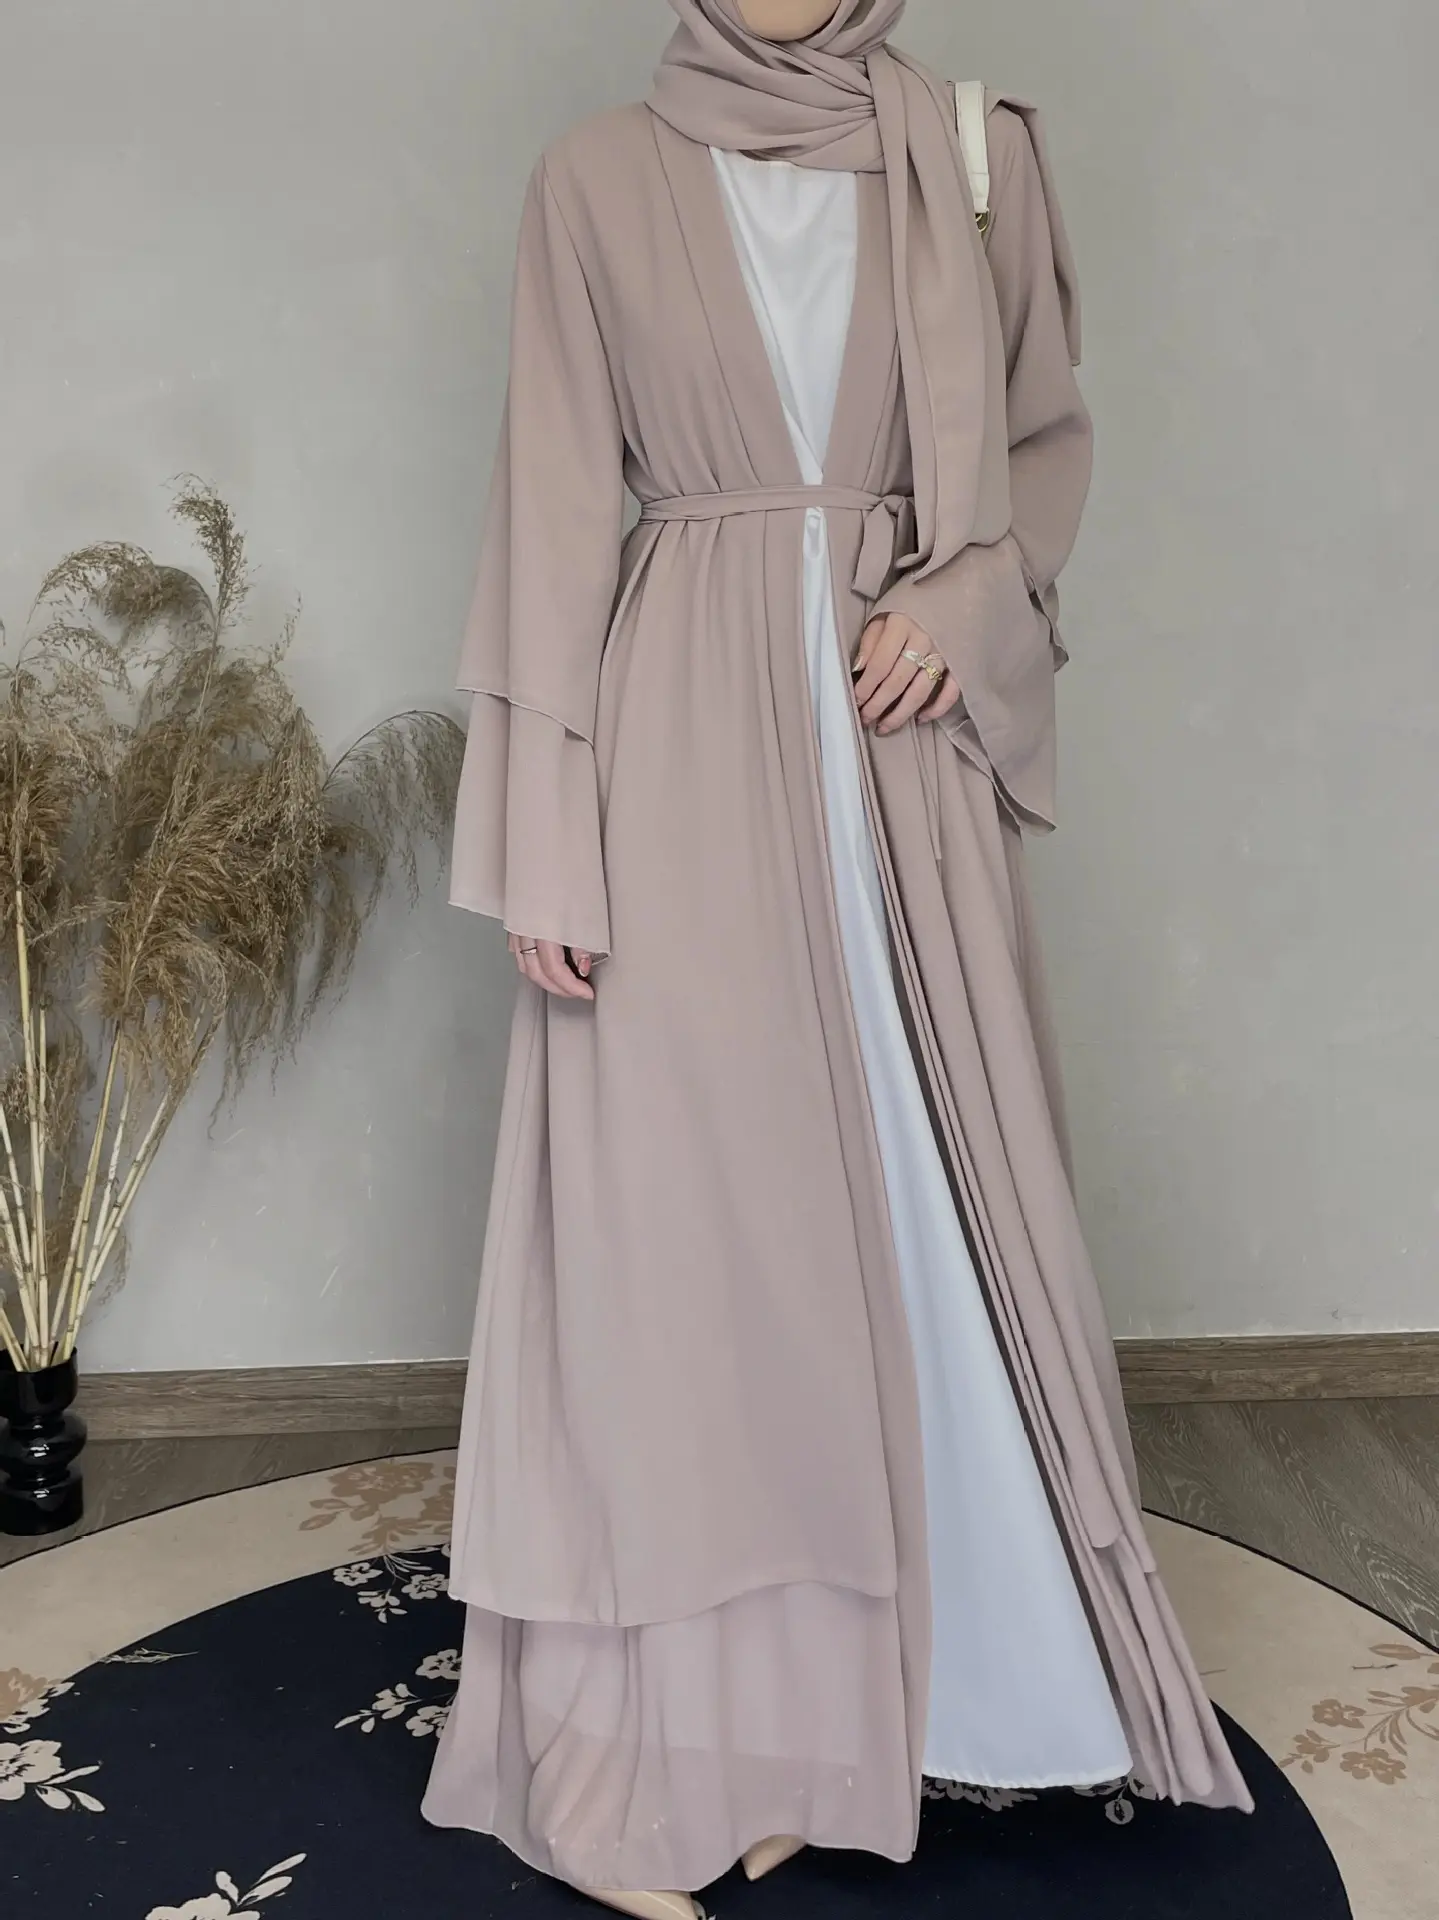 Vente en gros Turquie élégante EID femmes robe musulmane en mousseline de soie modeste robe musulmane assortie Hjiab Kimono ouvert Dubaï Abaya robe cardigan